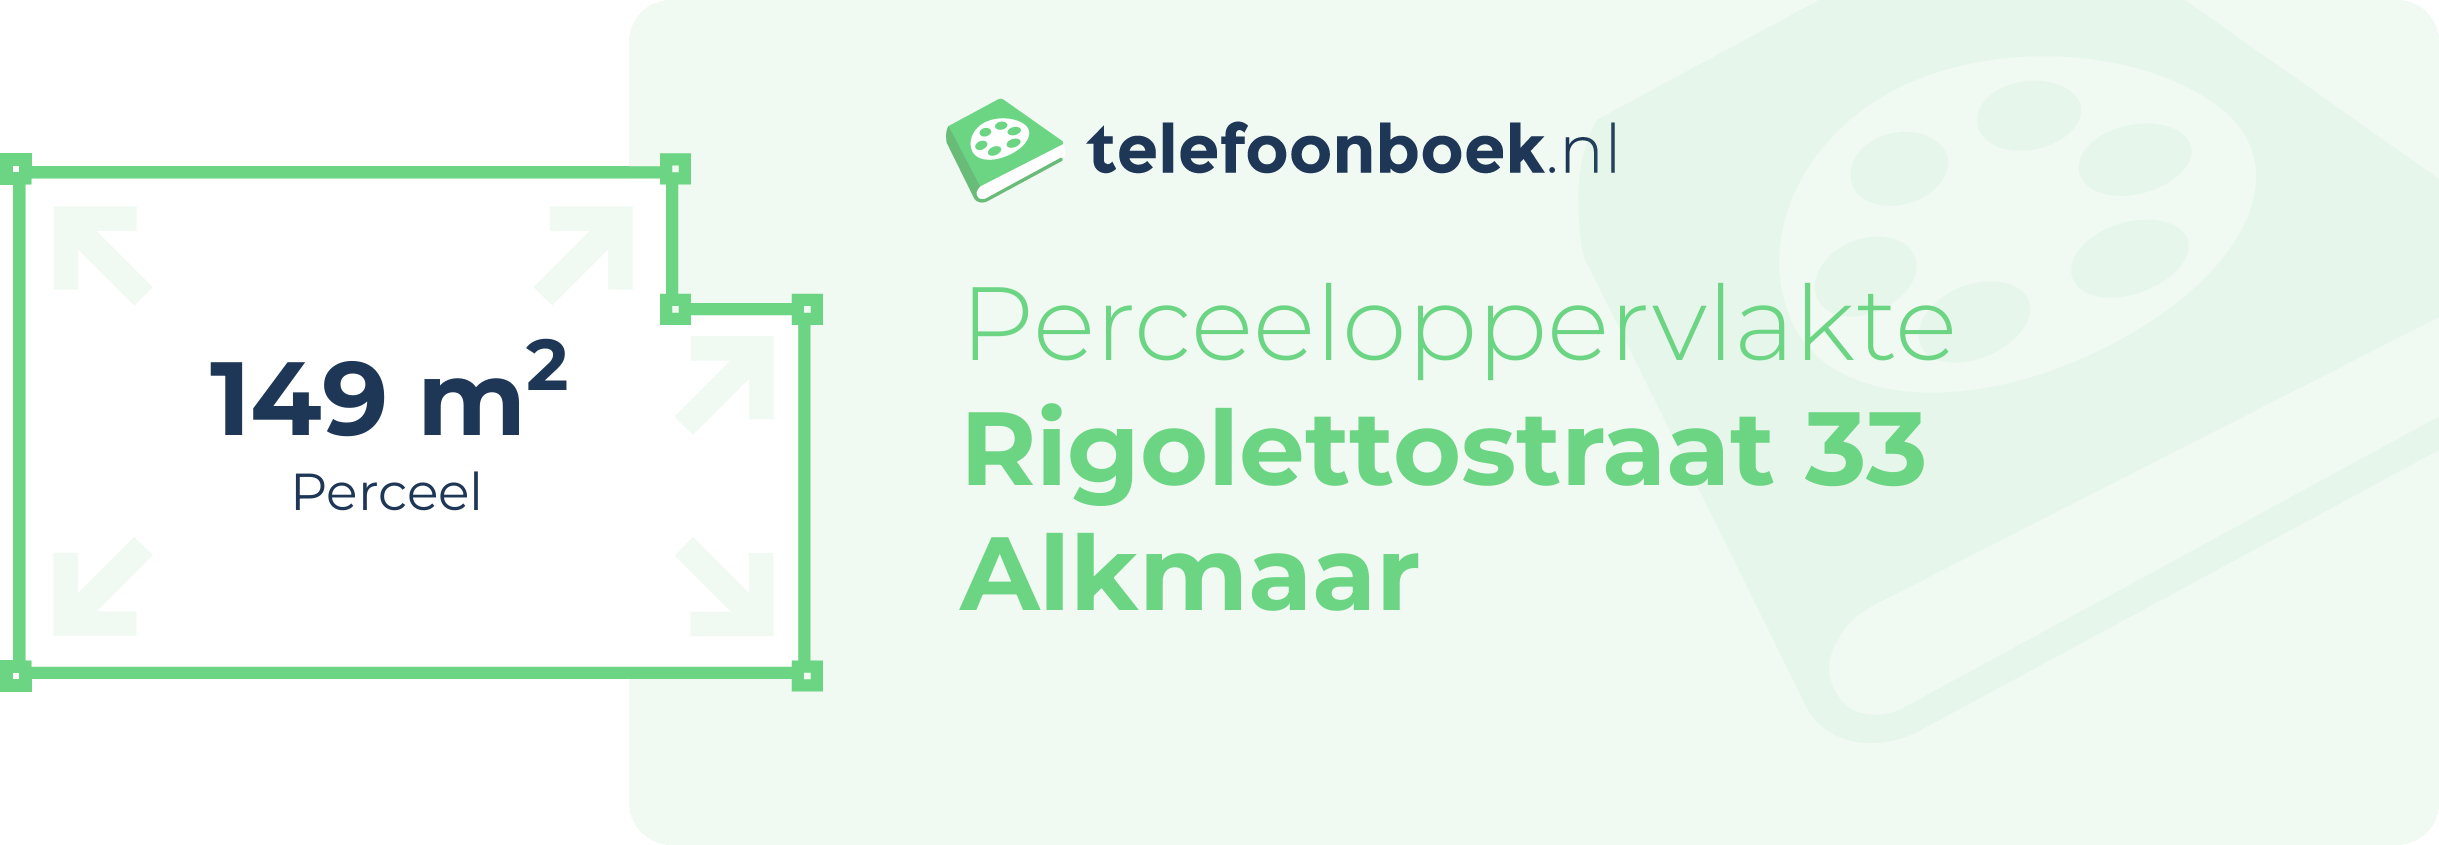 Perceeloppervlakte Rigolettostraat 33 Alkmaar